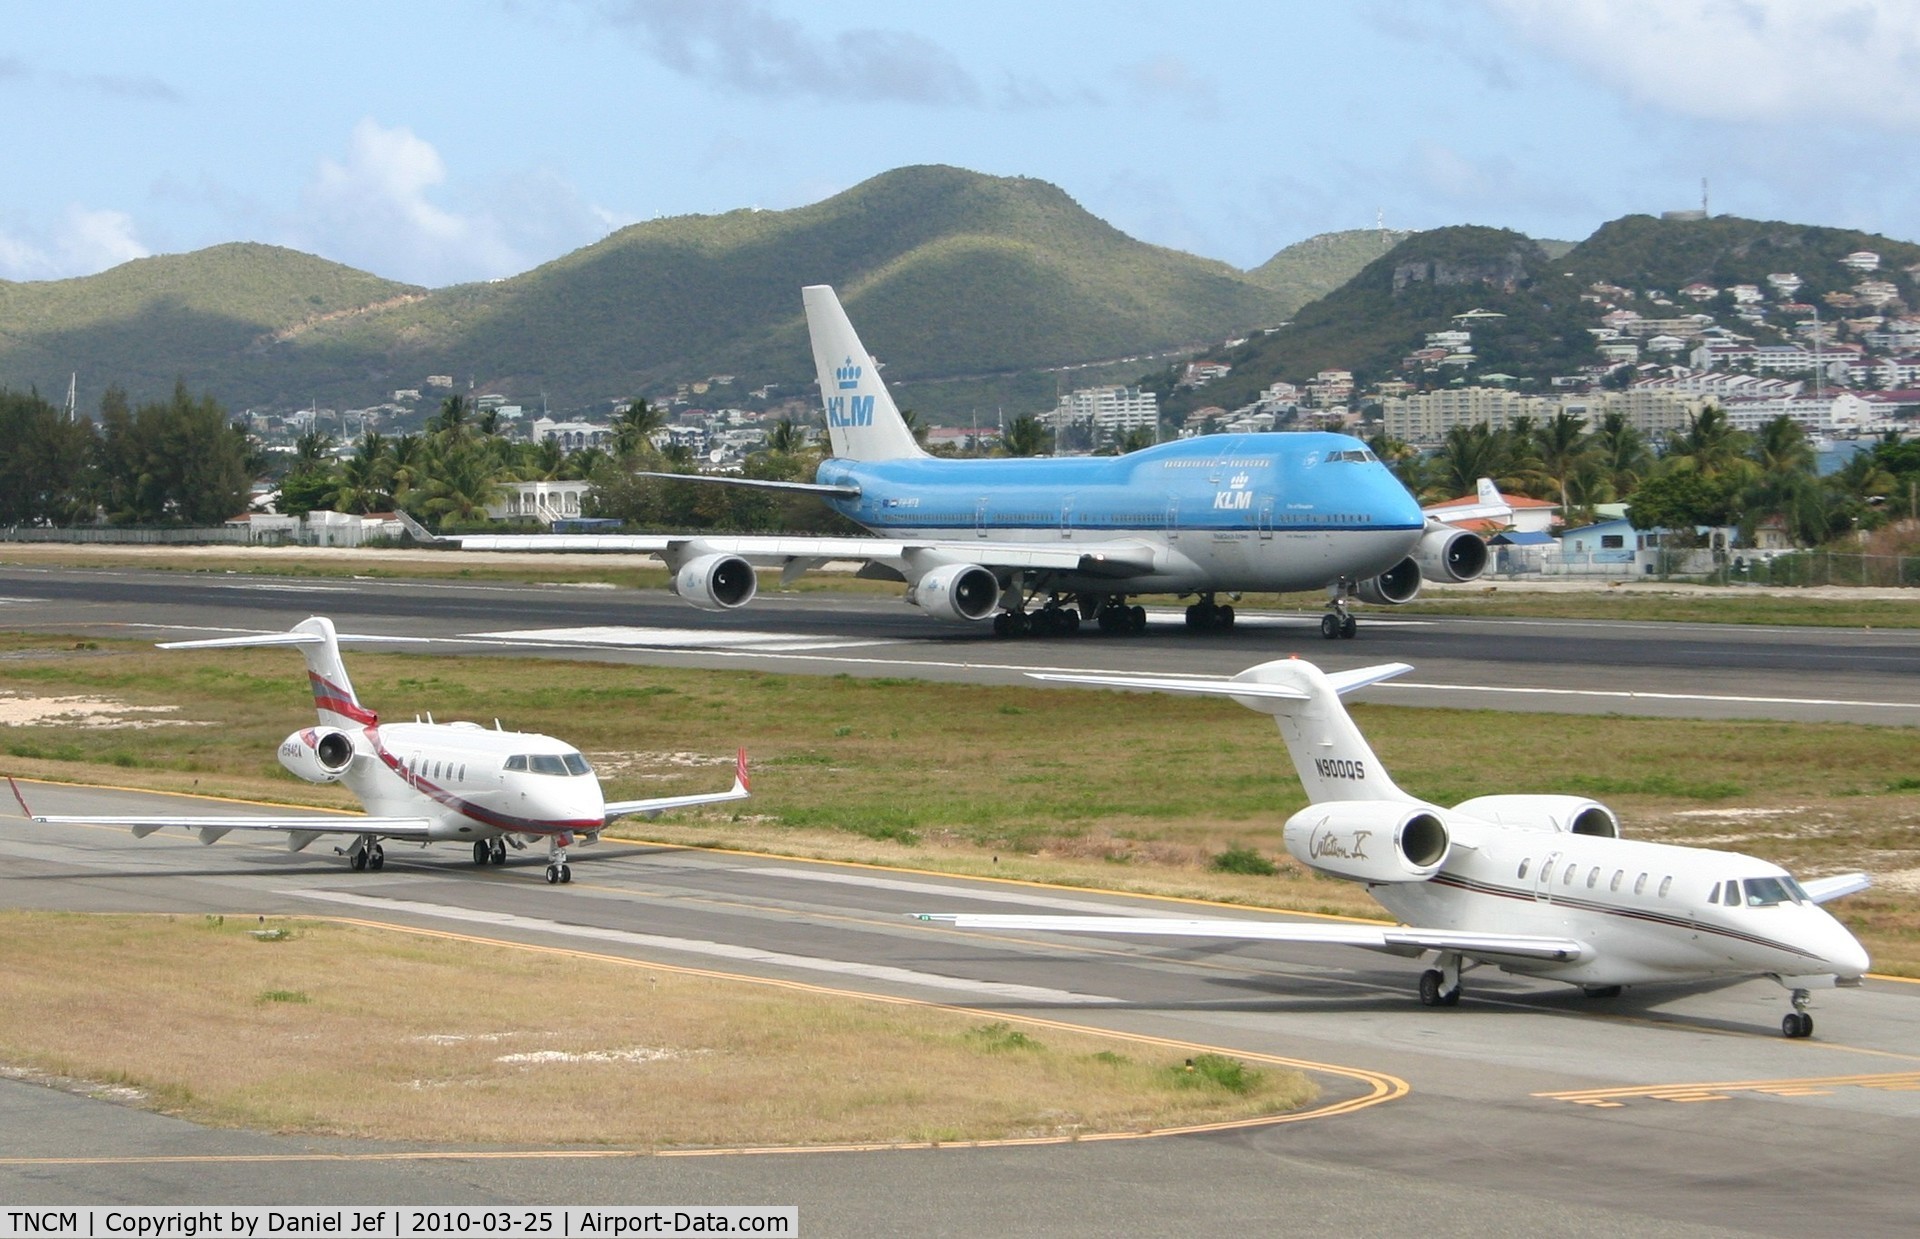 Princess Juliana International Airport, Philipsburg, Sint Maarten Netherlands Antilles (TNCM) - Now we all are leaving